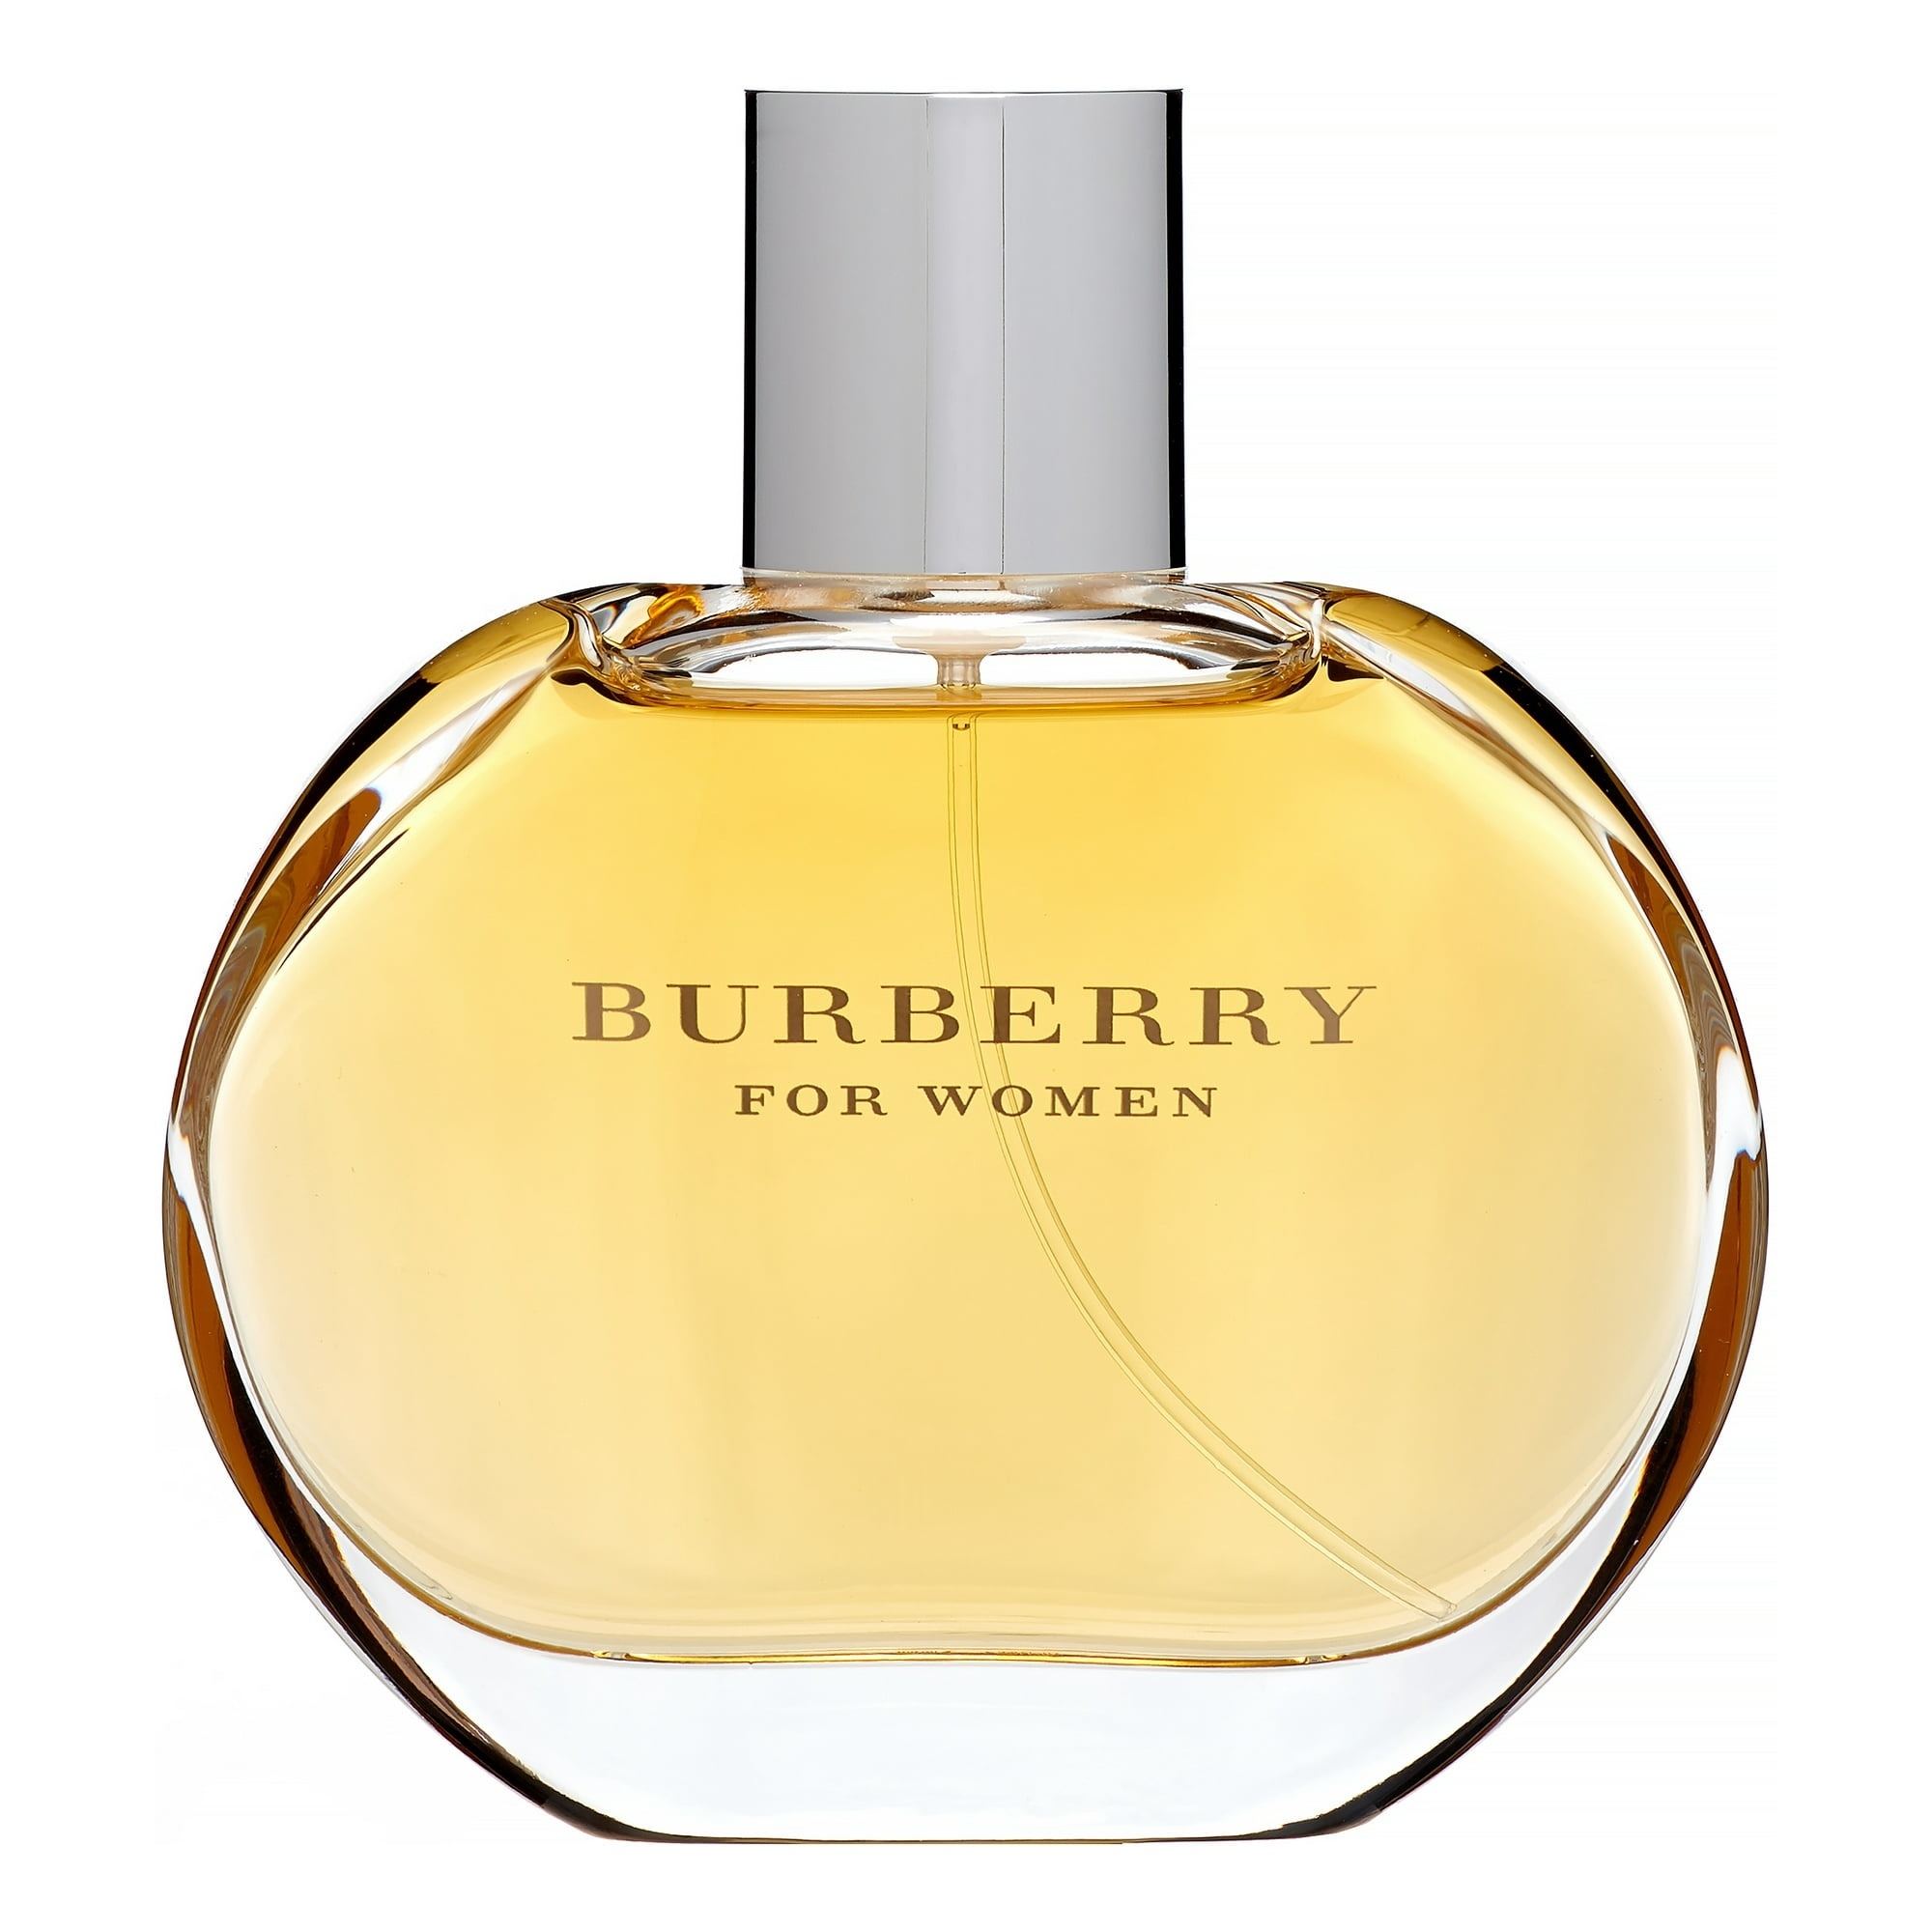 bottle of burberry perfume